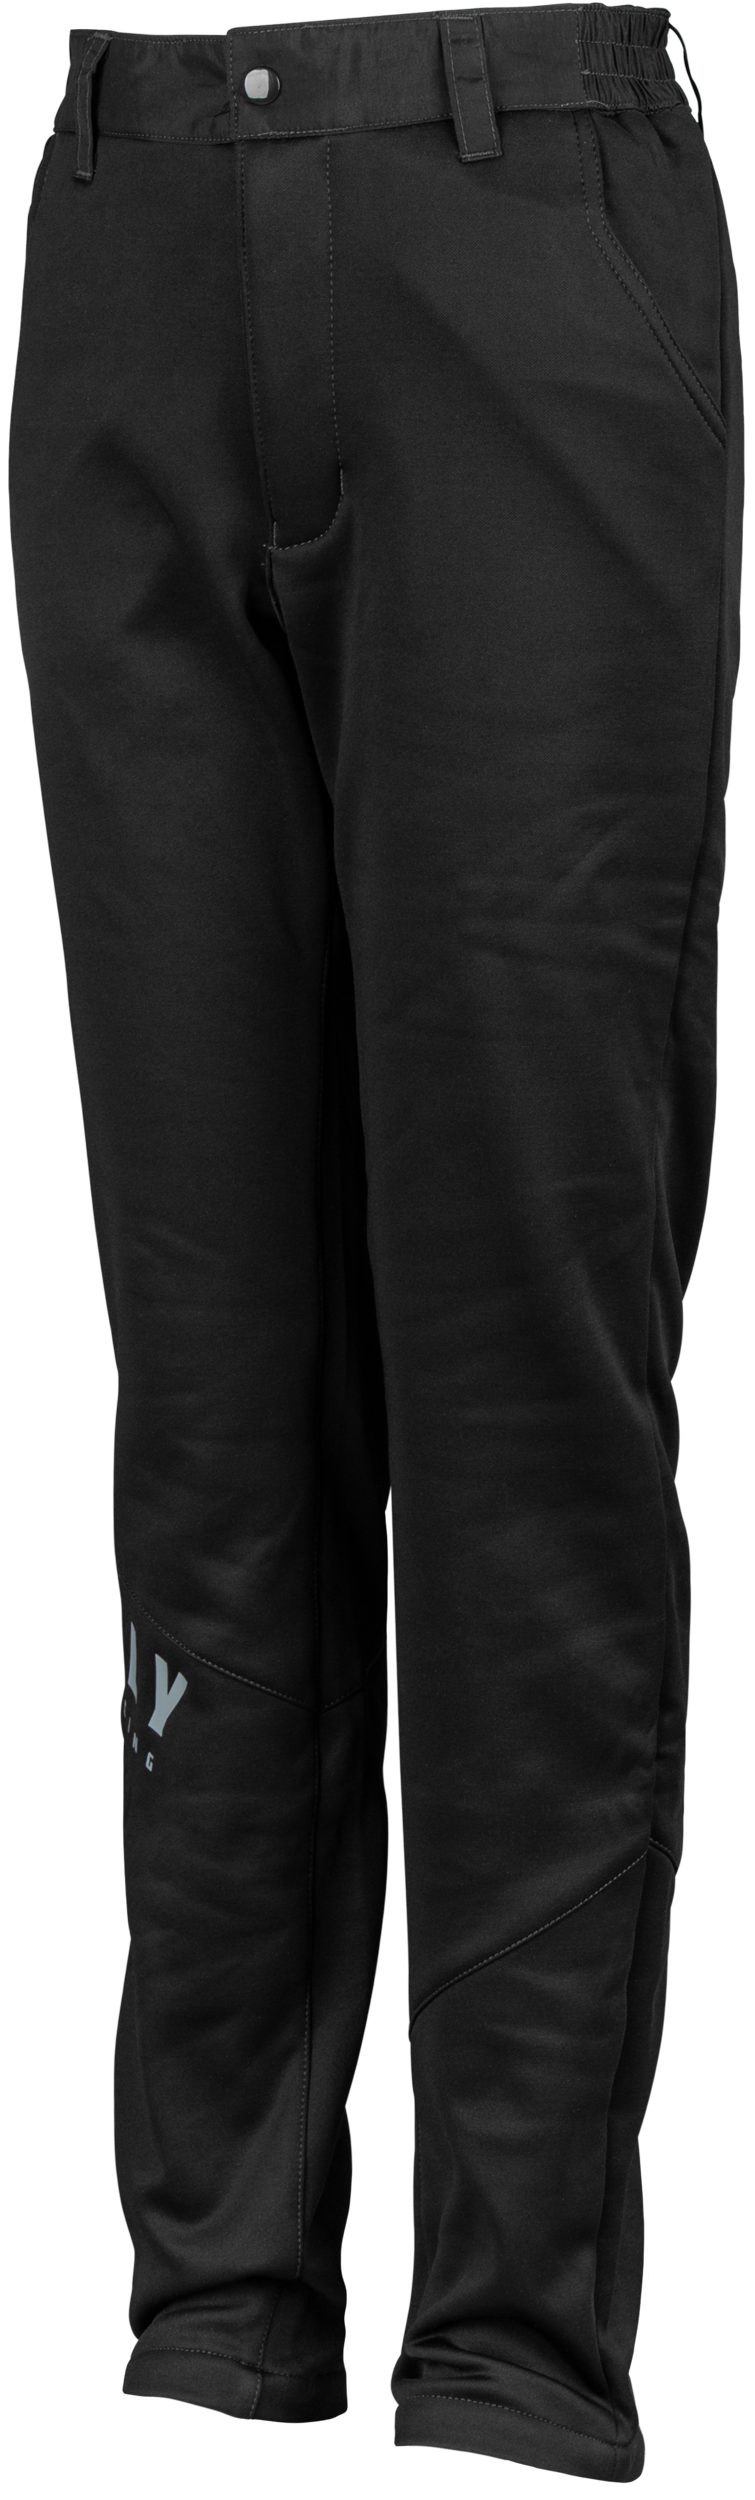 FLY RACING Women's Mid-Layer Pants Black Xl 354-6347X